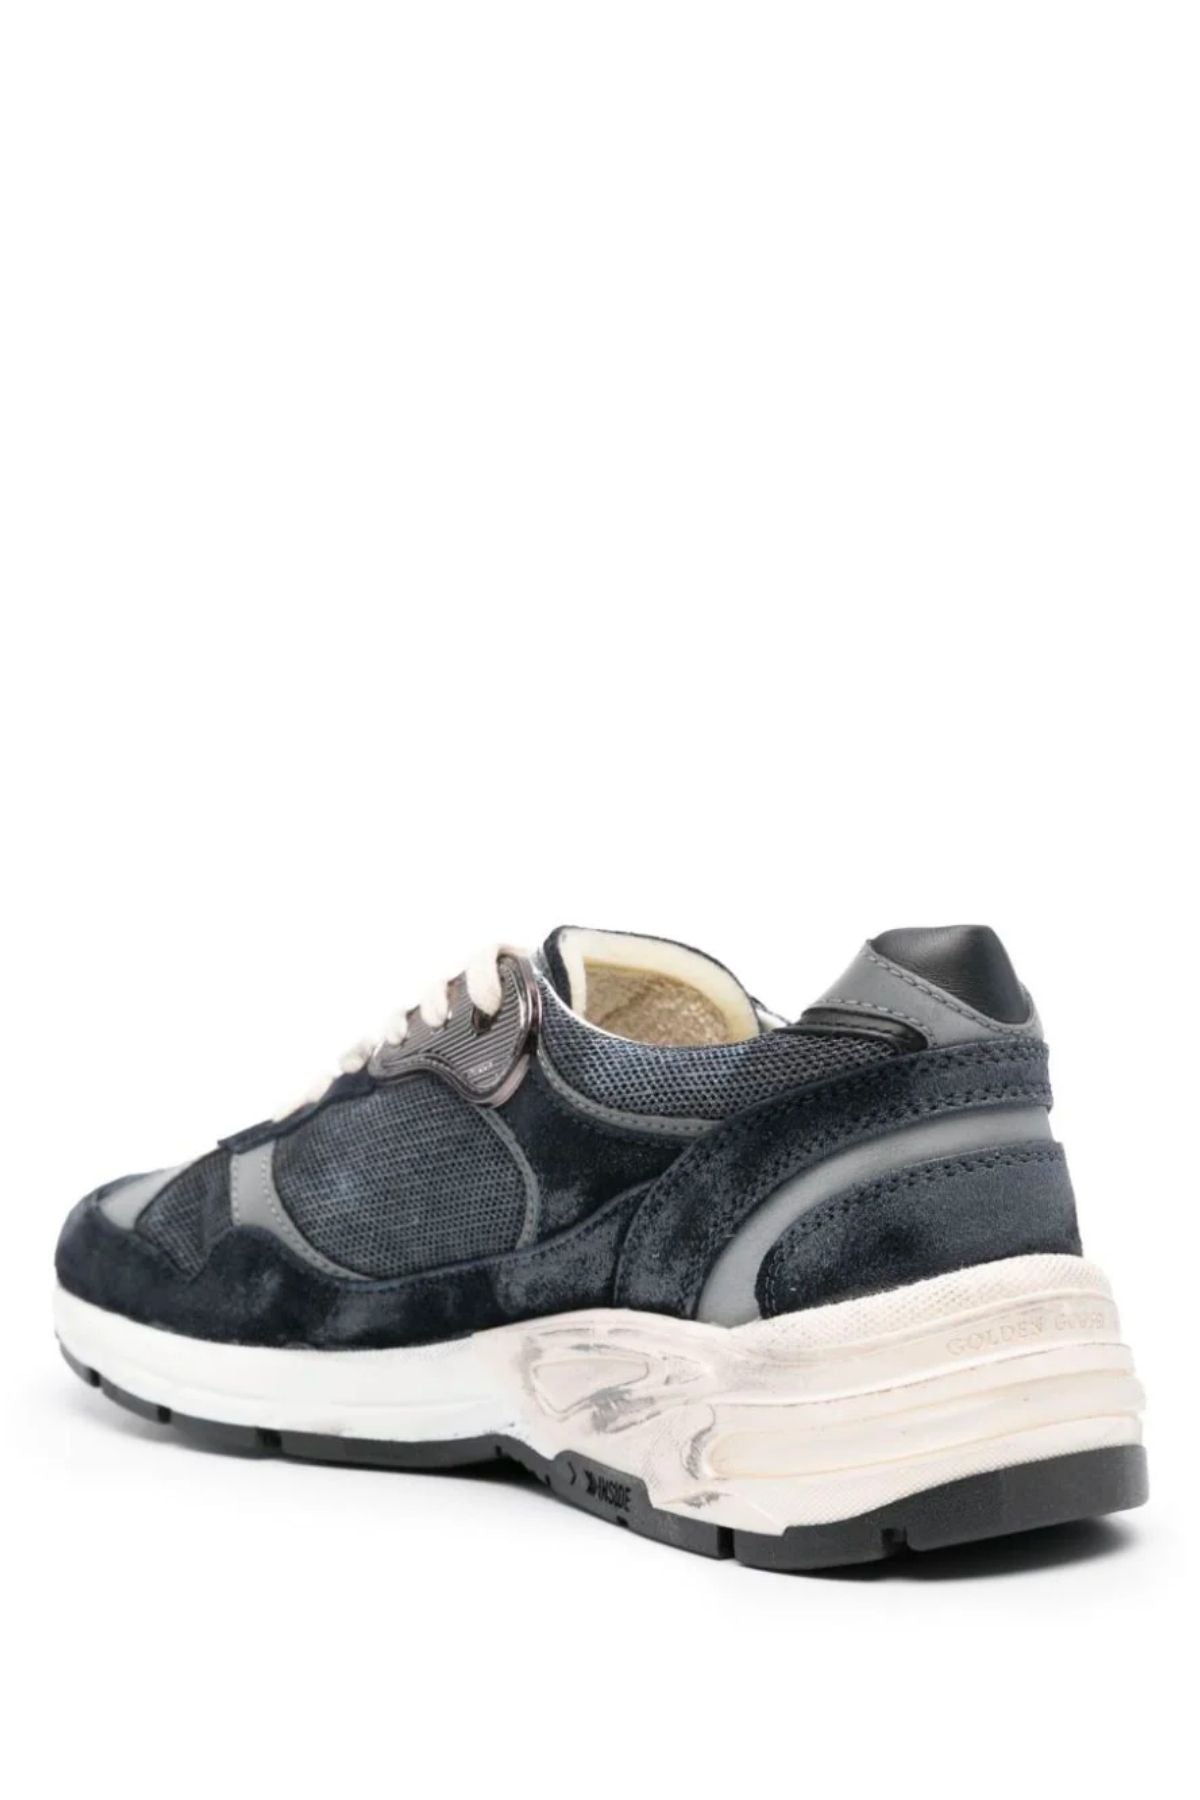 Golden Goose Running Dad Sneaker - Dark Blue/ Silver/ Black